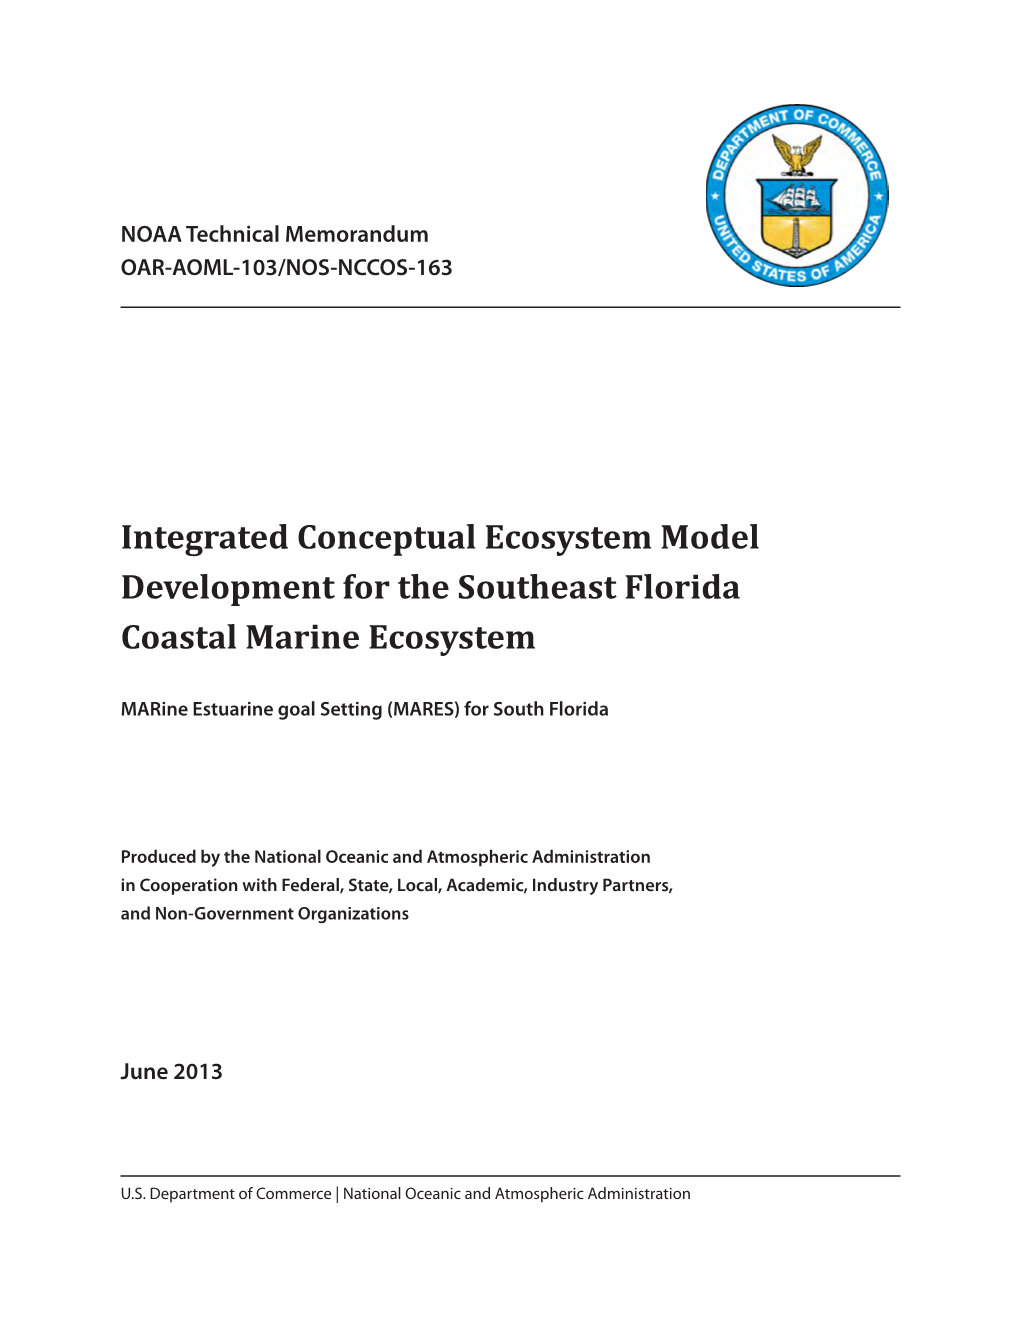 Integrated Conceptual Ecosystem Model Development for the Southeast Florida Coastal Marine Ecosystem